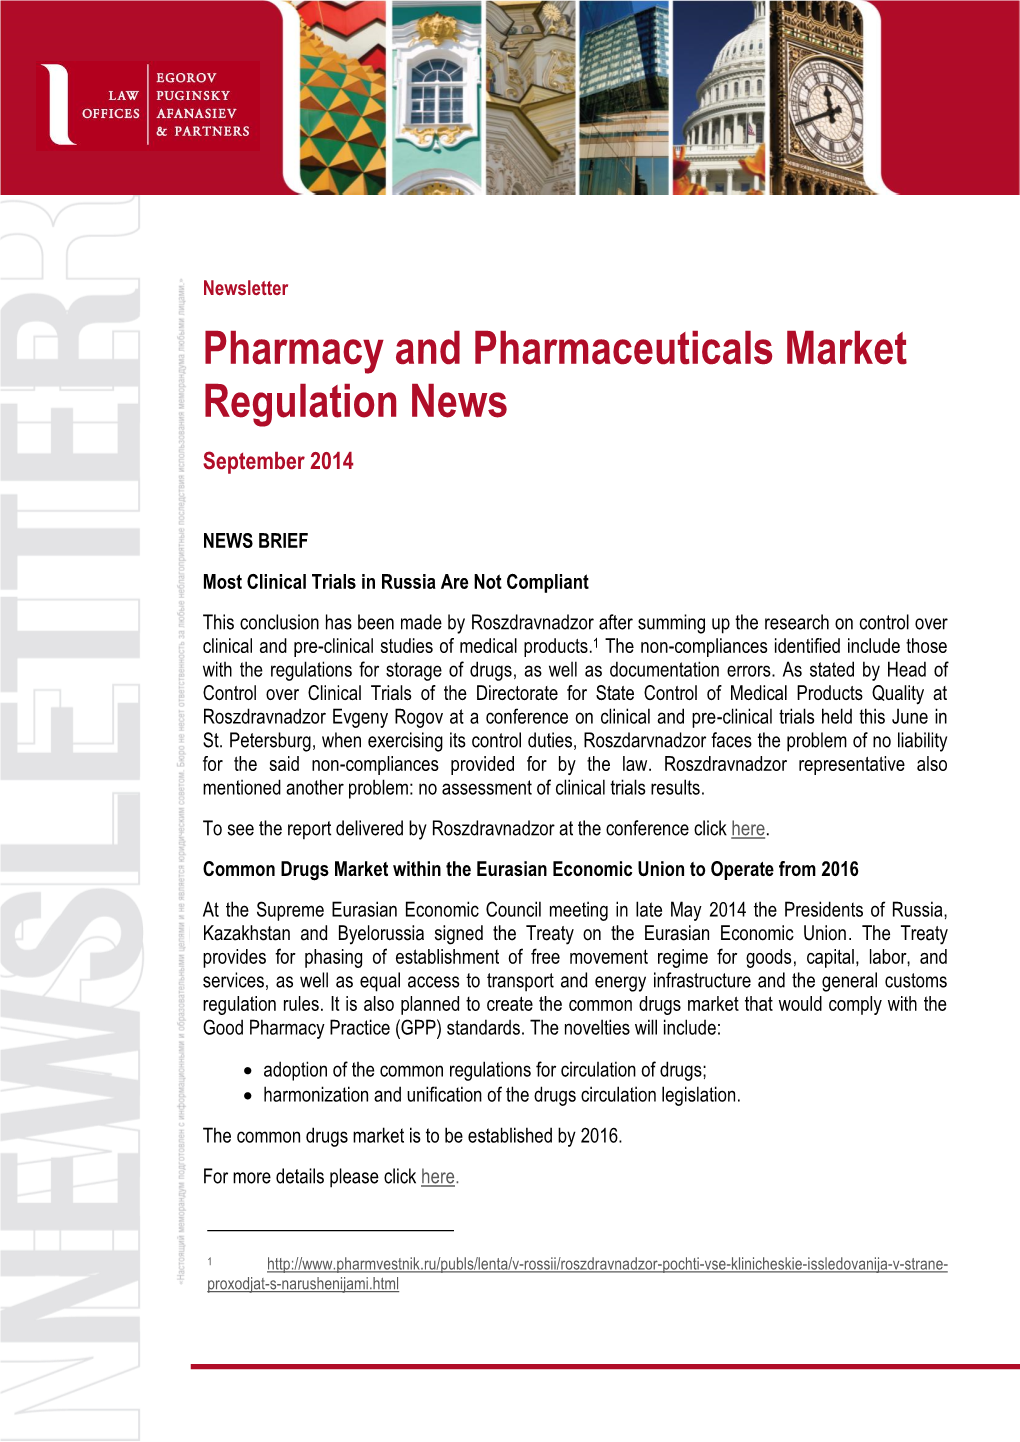 Pharmacy and Pharmaceuticals Market Regulation News. #6